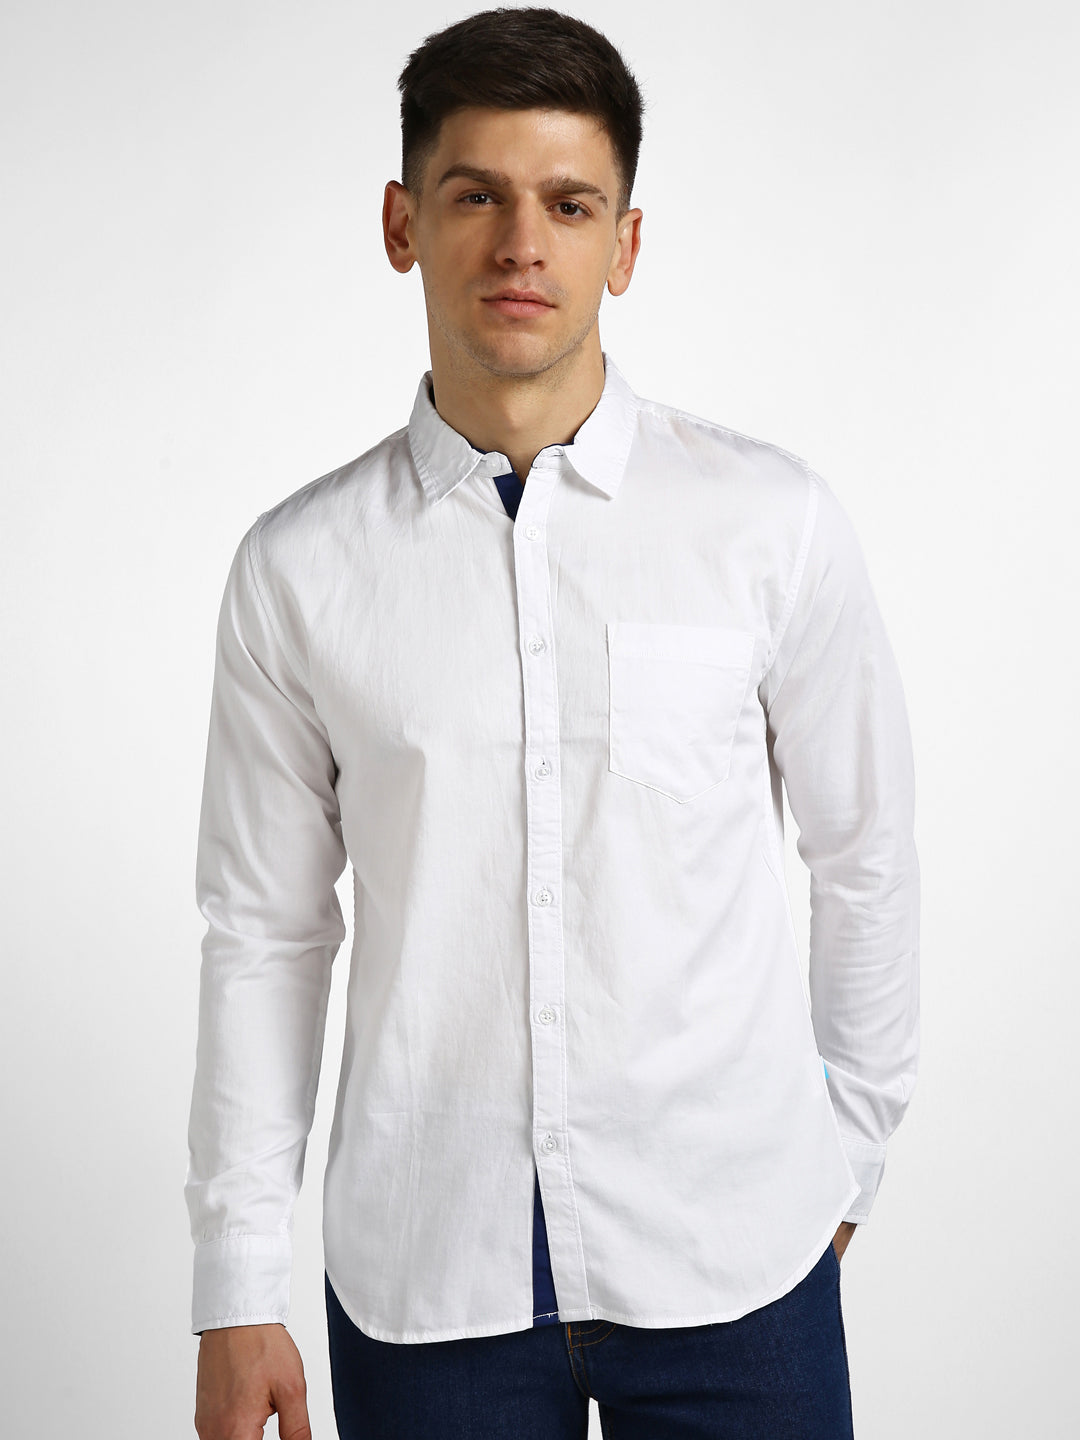 Urbano Fashion Men's White Cotton Full Sleeve Slim Fit Casual Solid Shirt